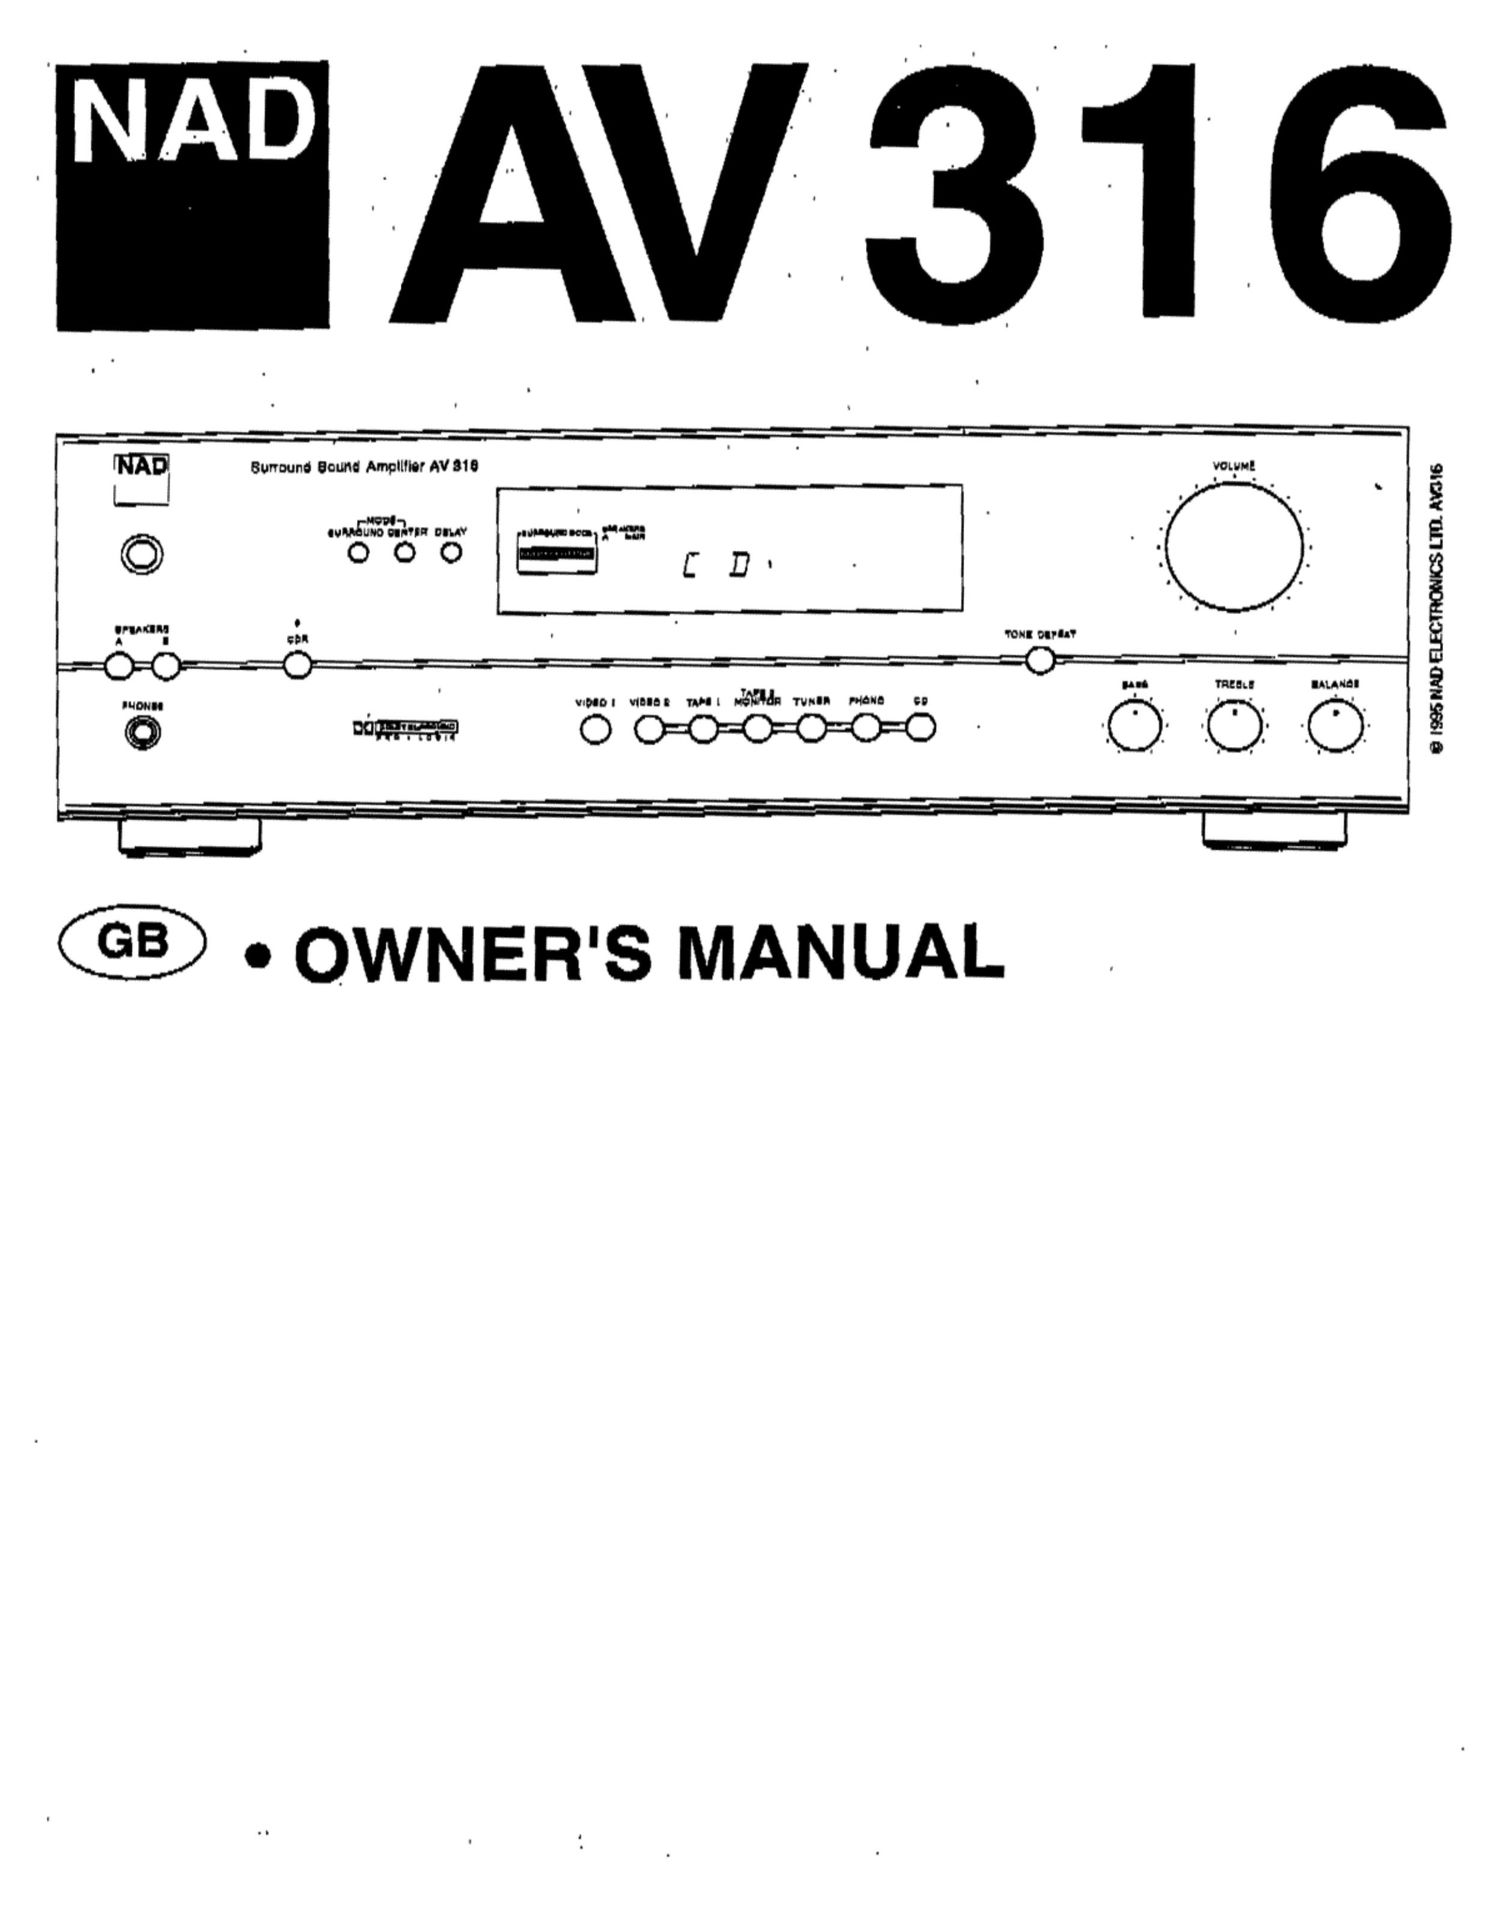 Nad AV 316 Owners Manual